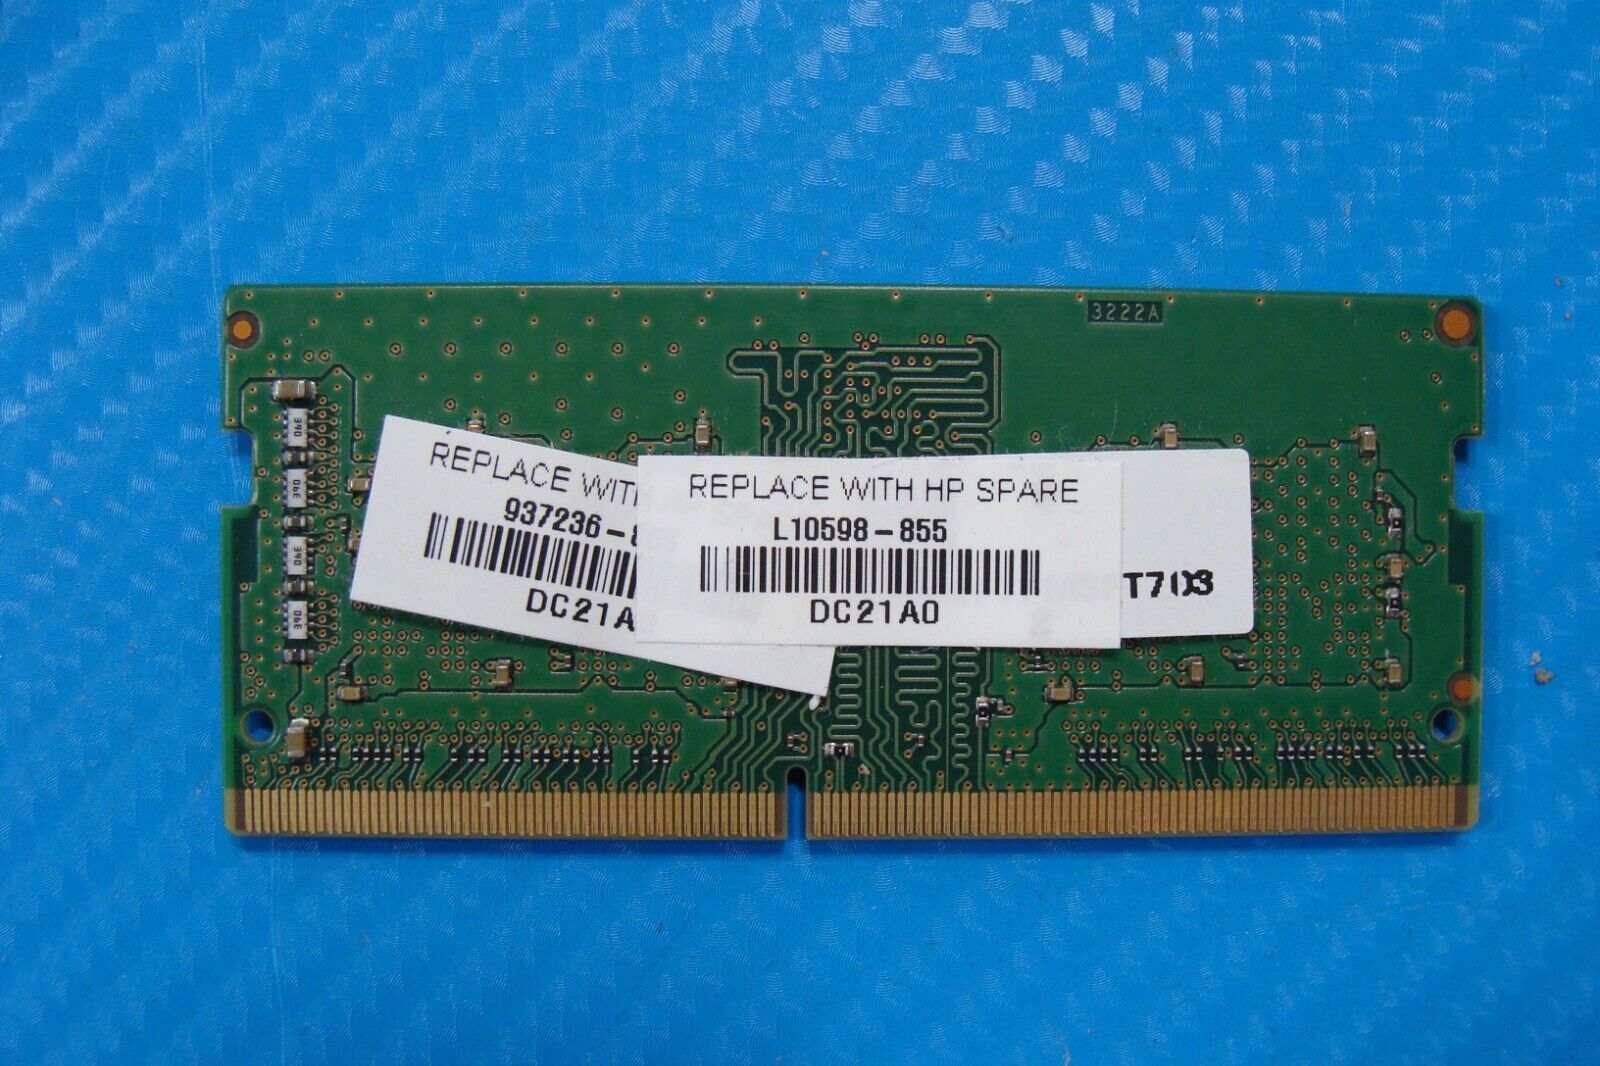 HP 15-dy2089ms Samsung 4GB PC4-3200AA Memory RAM SO-DIMM MTA4ATF51264HZ-3G2R1